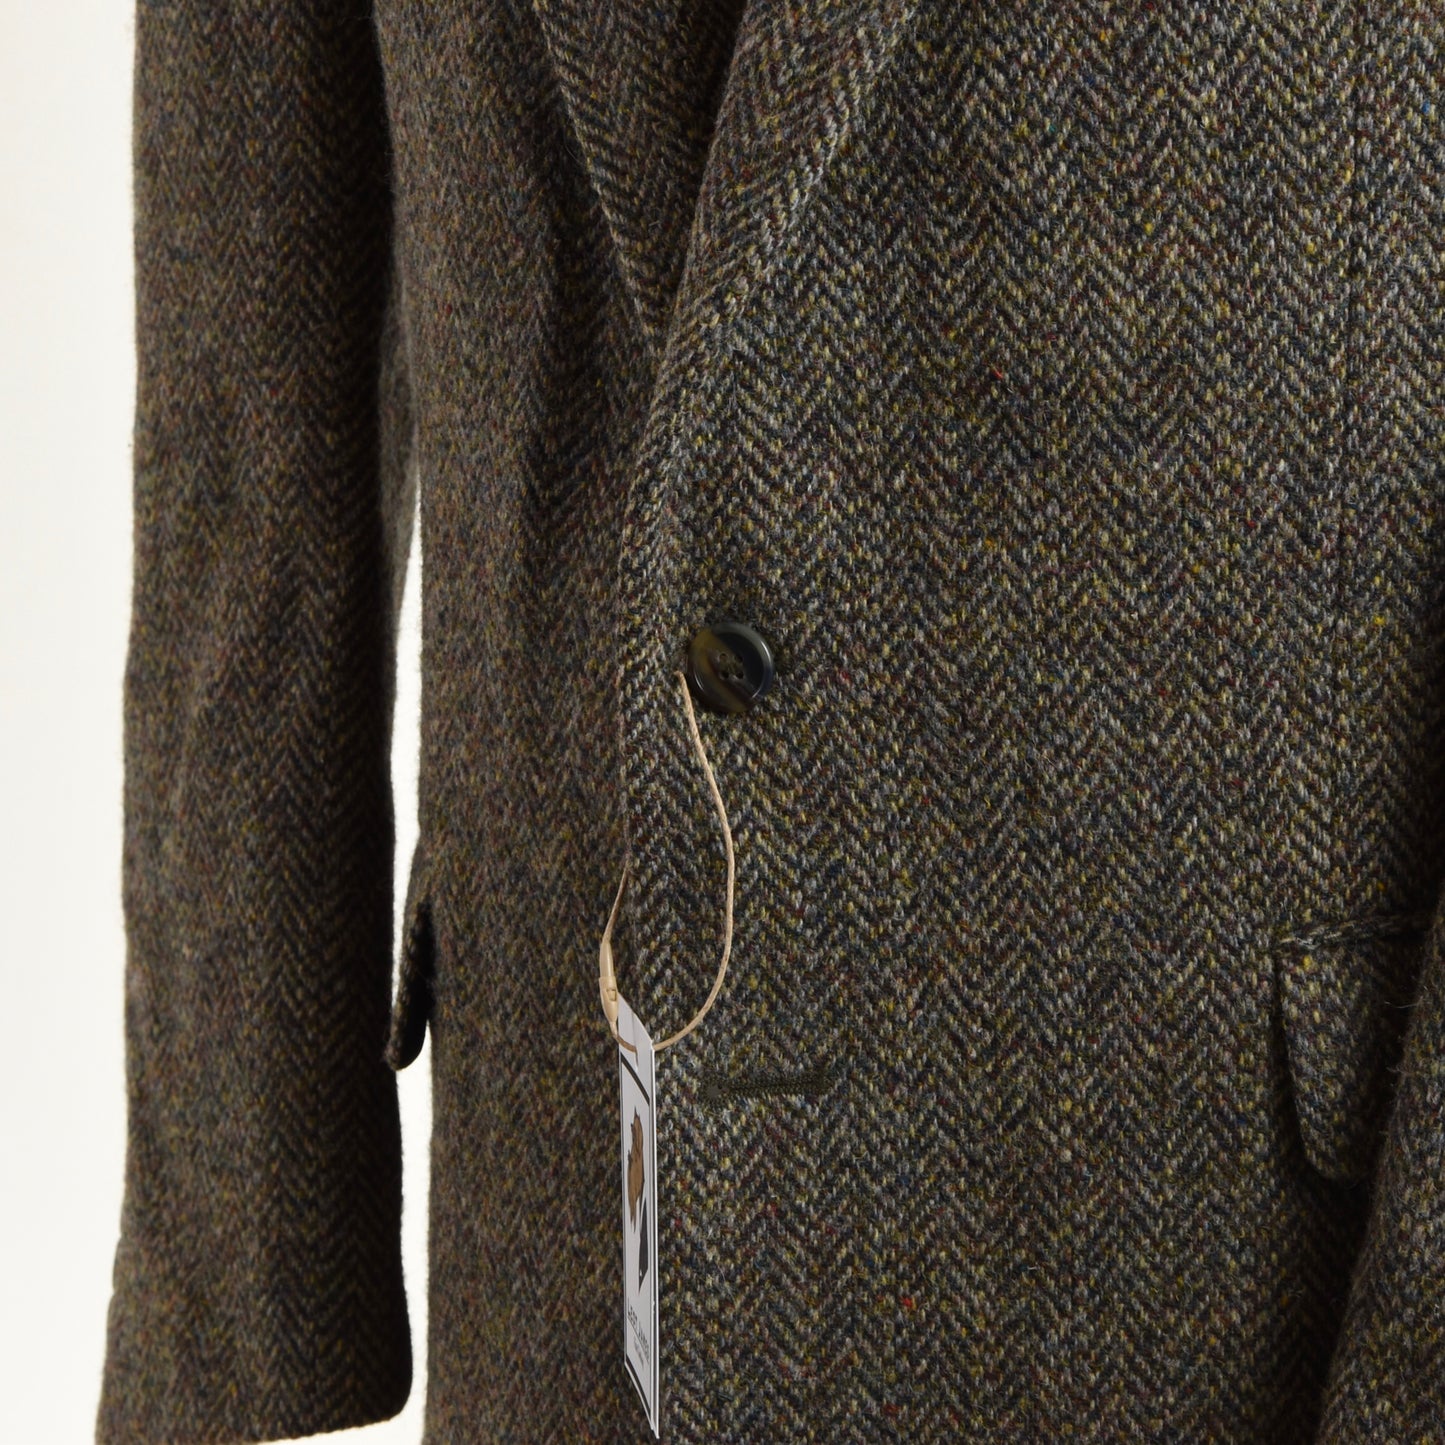 Buttonhole Harris Tweed Jacket Size 42 R